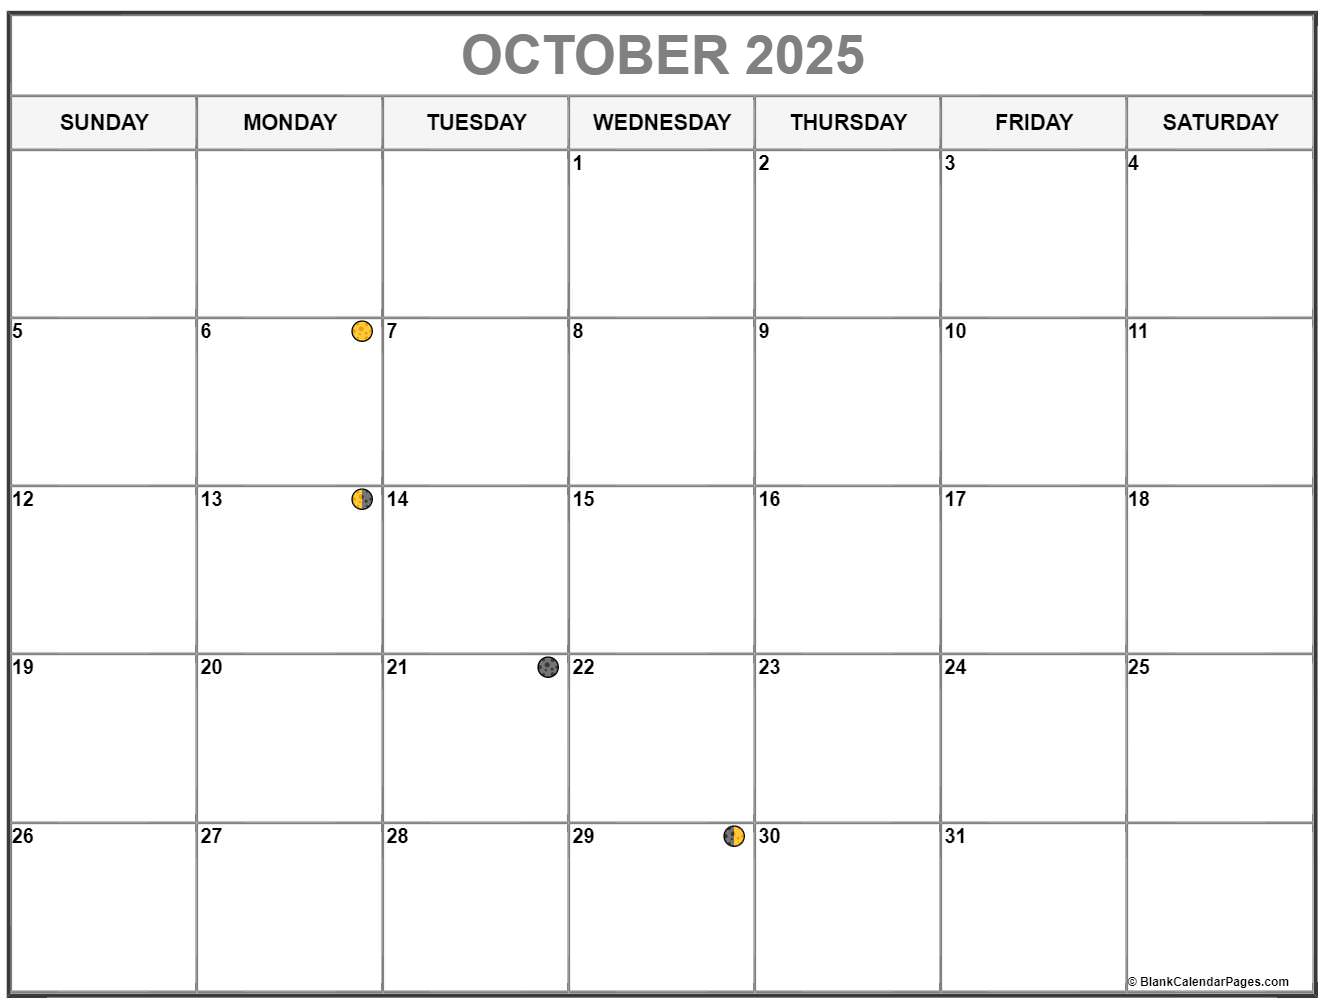 october-2025-lunar-calendar-moon-phase-calendar